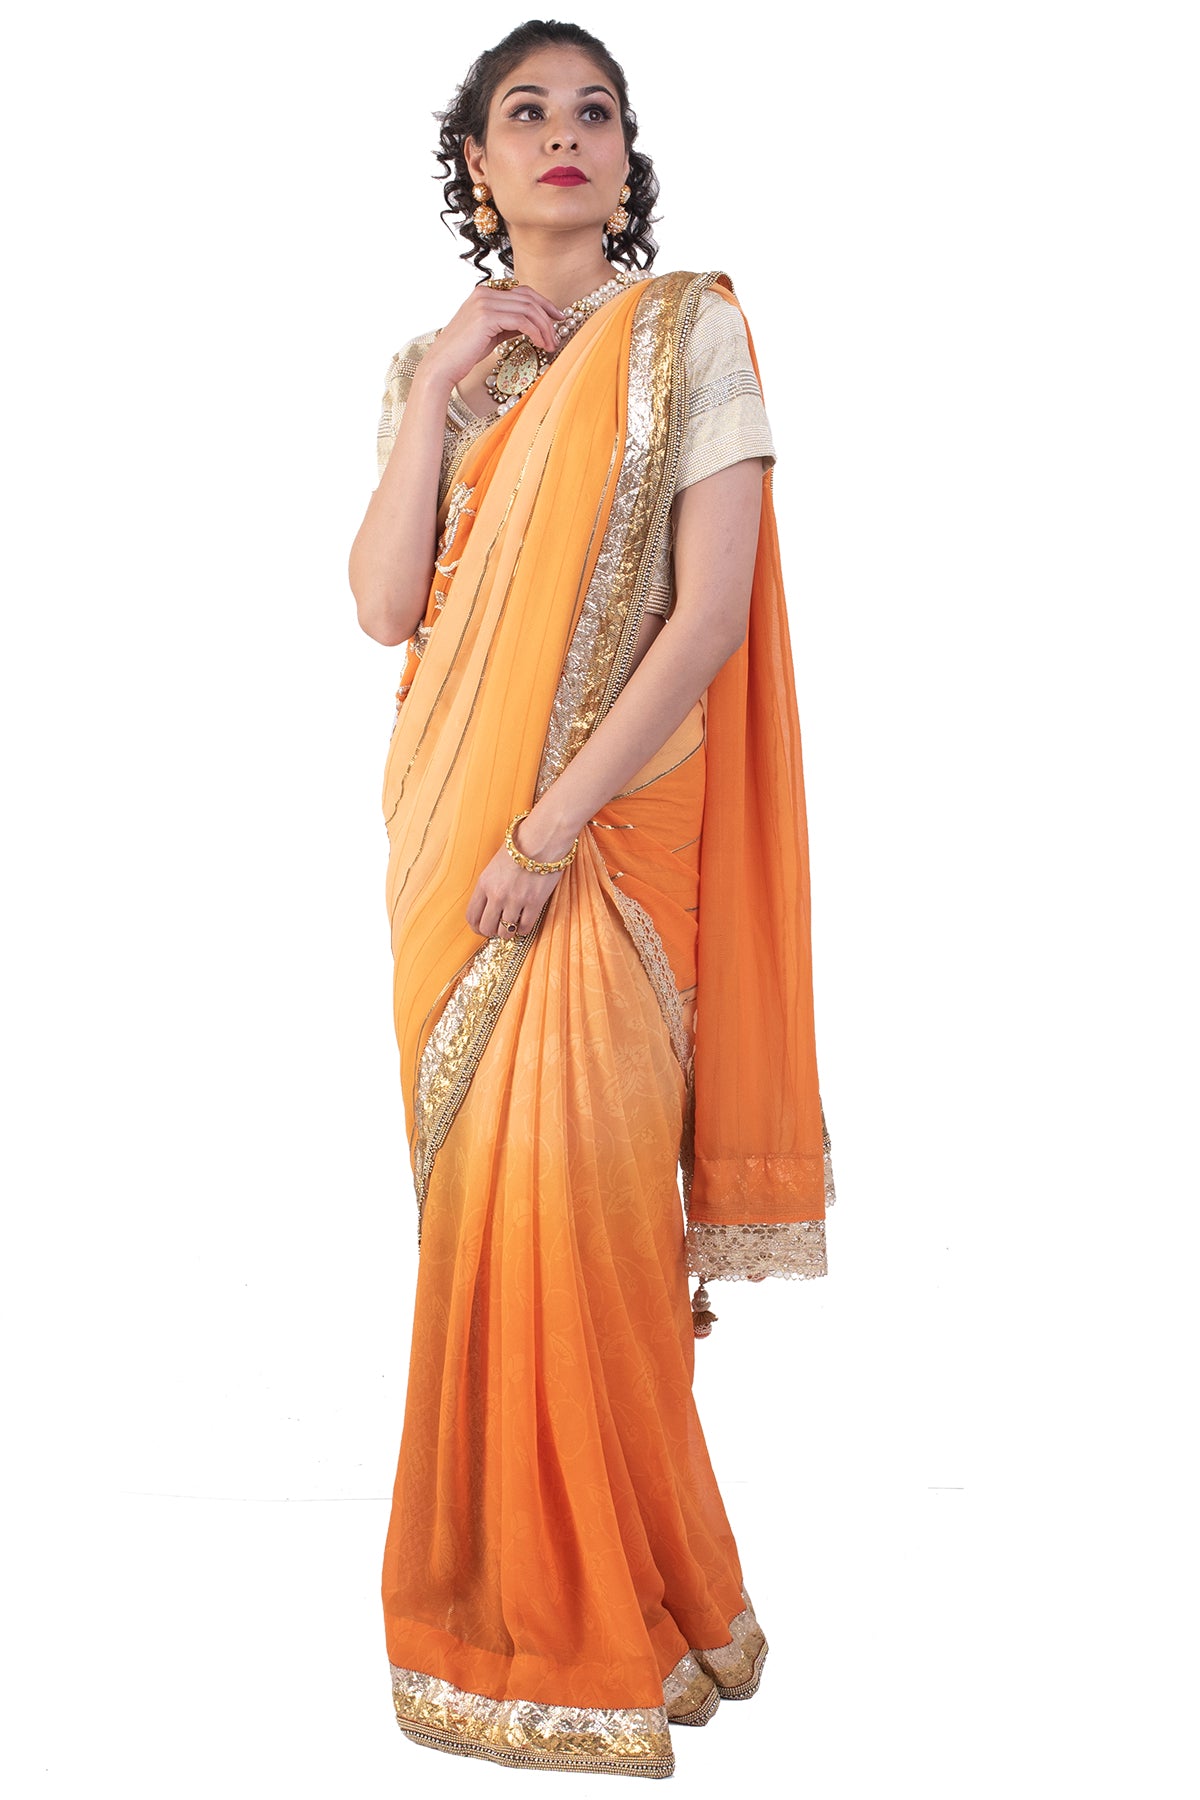 Jigar Mali Embroidered Saree With Blouse | Orange, Dori, Chiniya Silk,  Plunge Neck, Half | Orange saree, Saree, Blouses for women